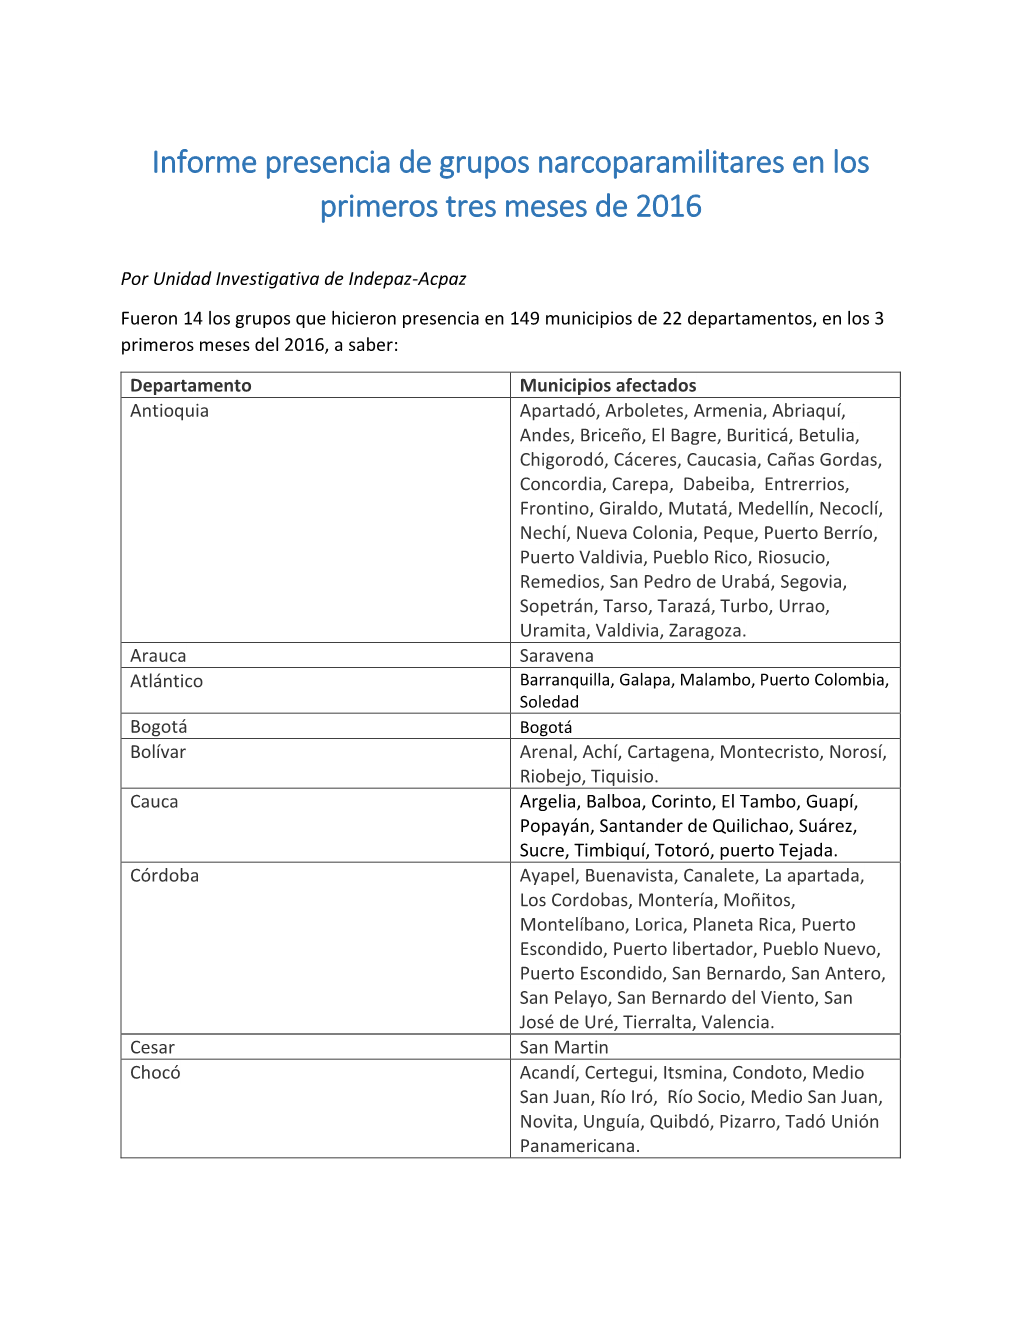 Informe Presencia De Grupos Narcoparamilitares En Los Primeros Tres Meses De 2016